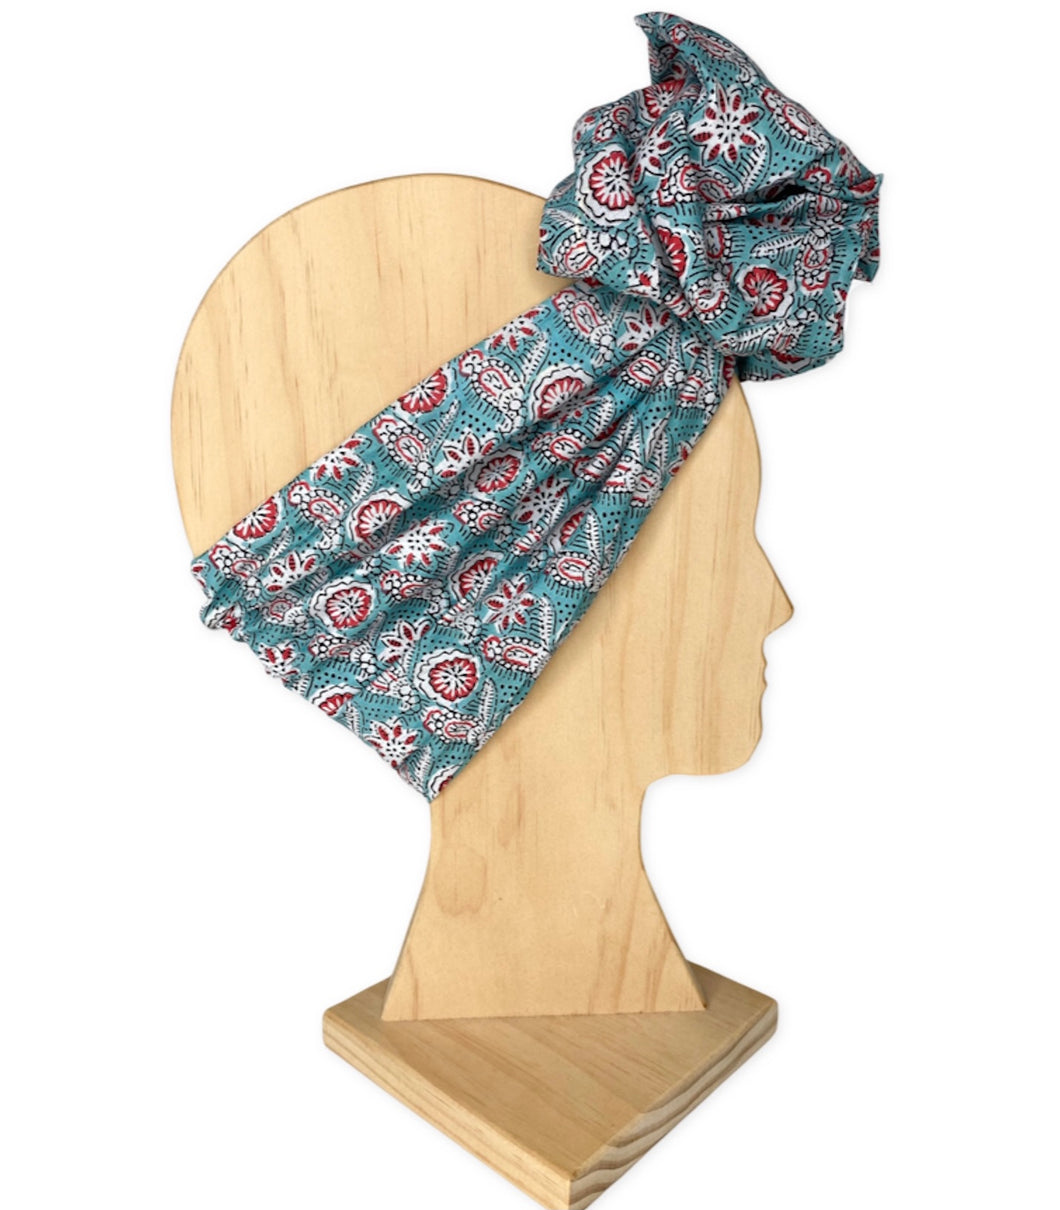 Teal Paisley Boho Wire Headband- Cotton fabric- Handmade